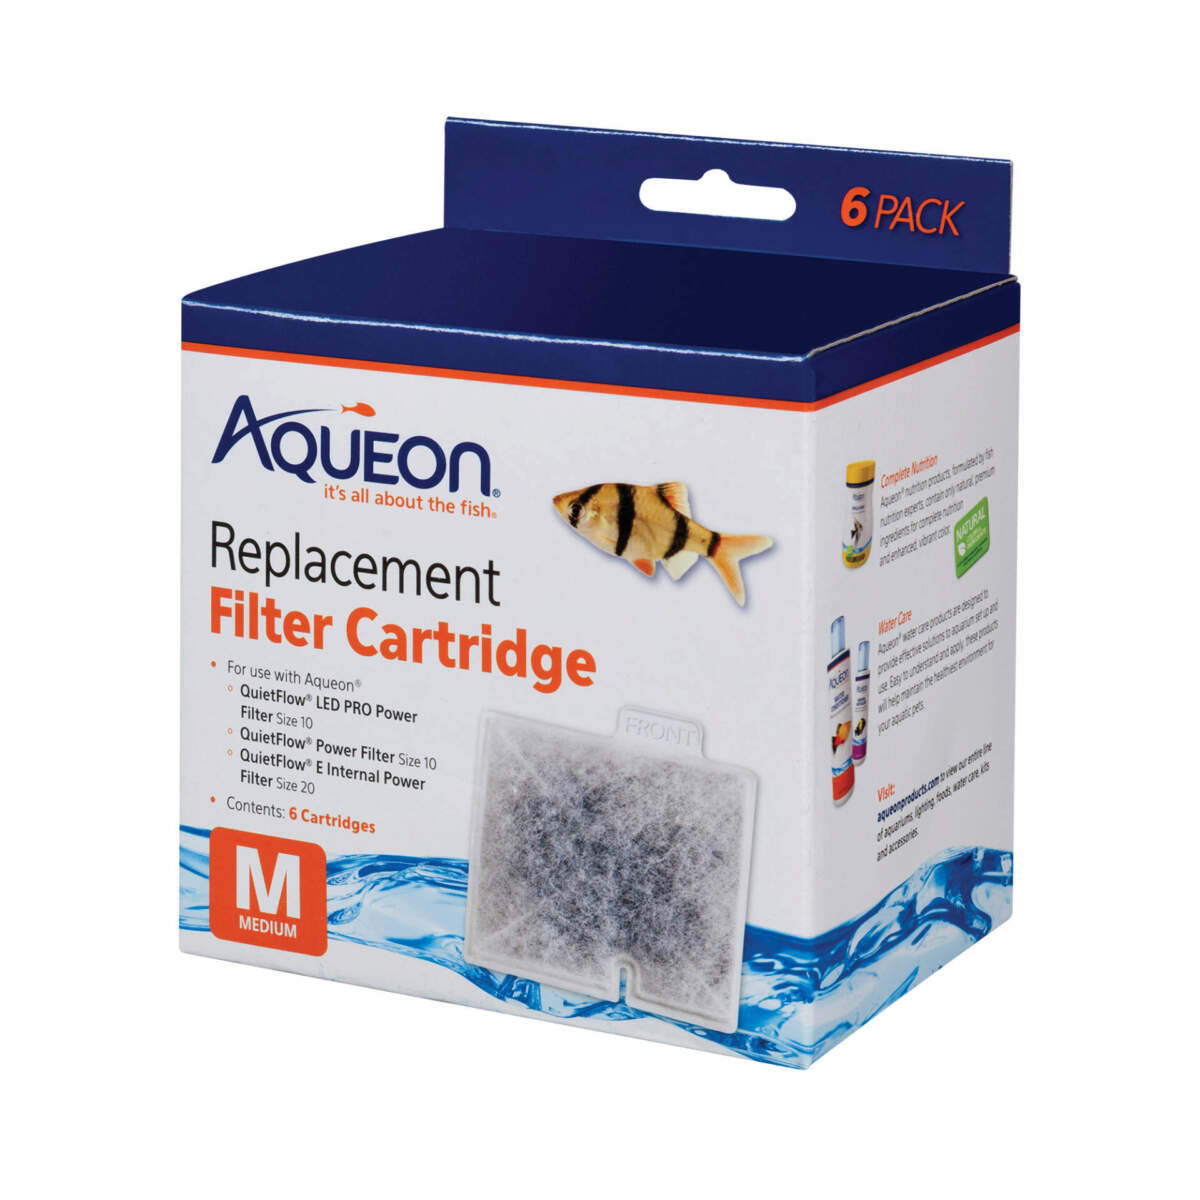 Aqueon Replacement Filter Cartridge Medium